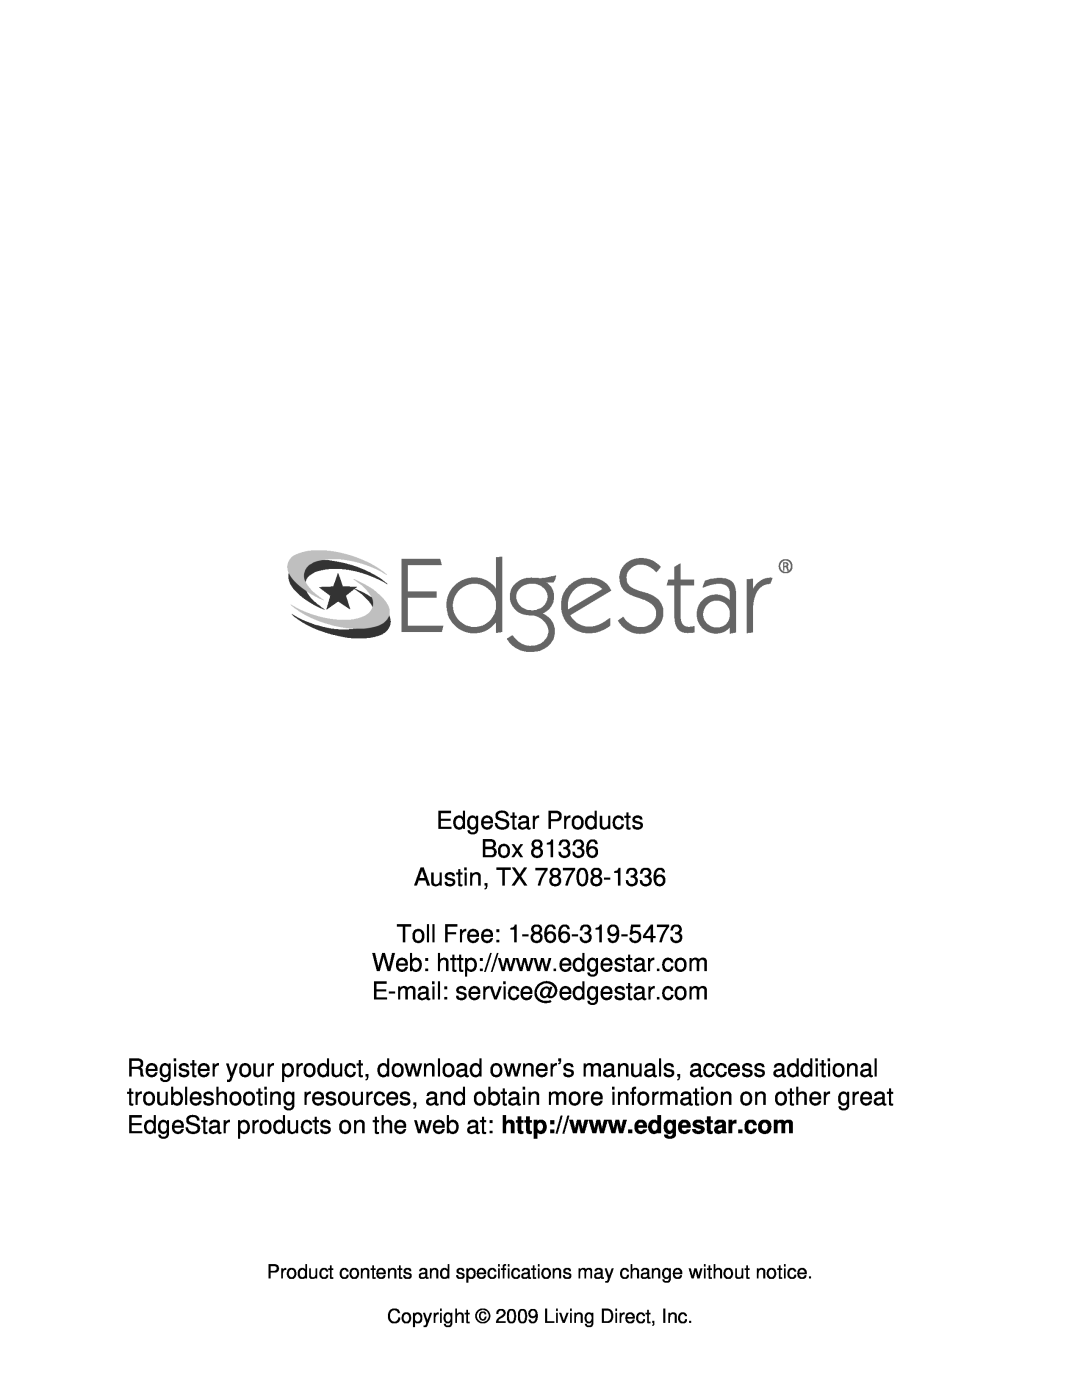 EdgeStar AP14000W owner manual EdgeStar Products Box Austin, TX Toll Free, Copyright 2009 Living Direct, Inc 